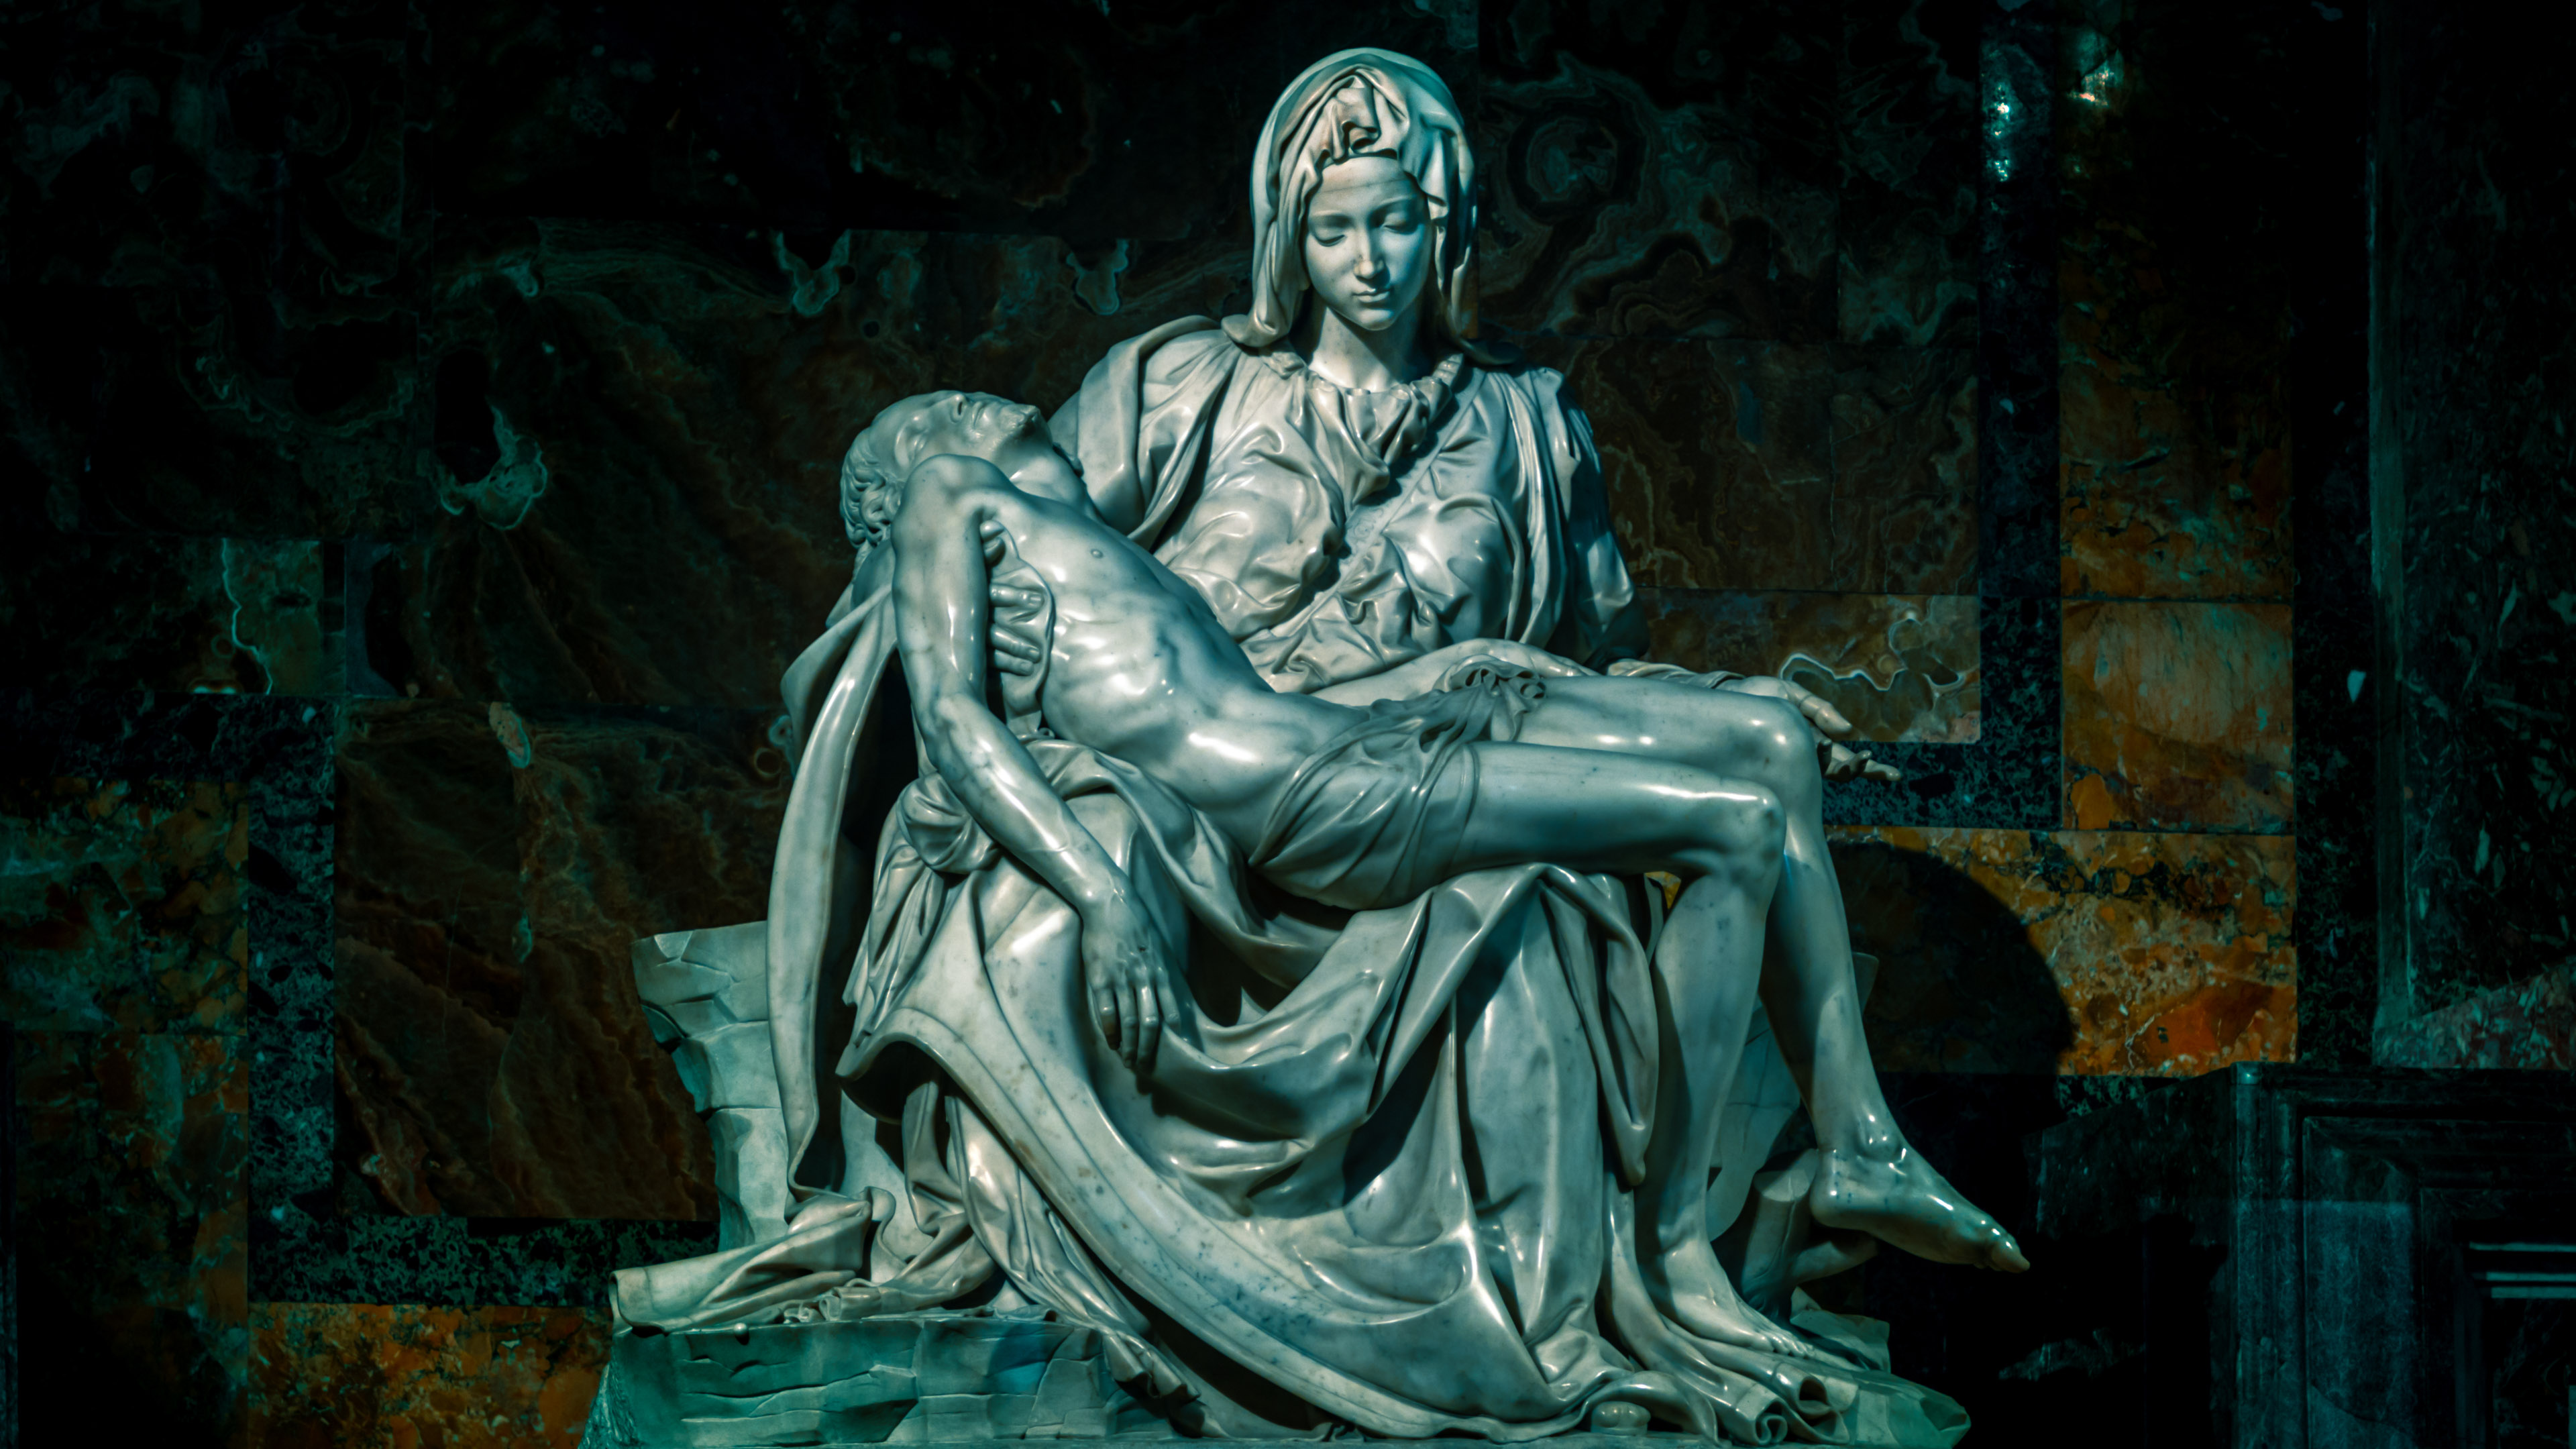 Adorn your Macbook with the divine beauty of Michelangelo's Pieta sculpture in high resolution.